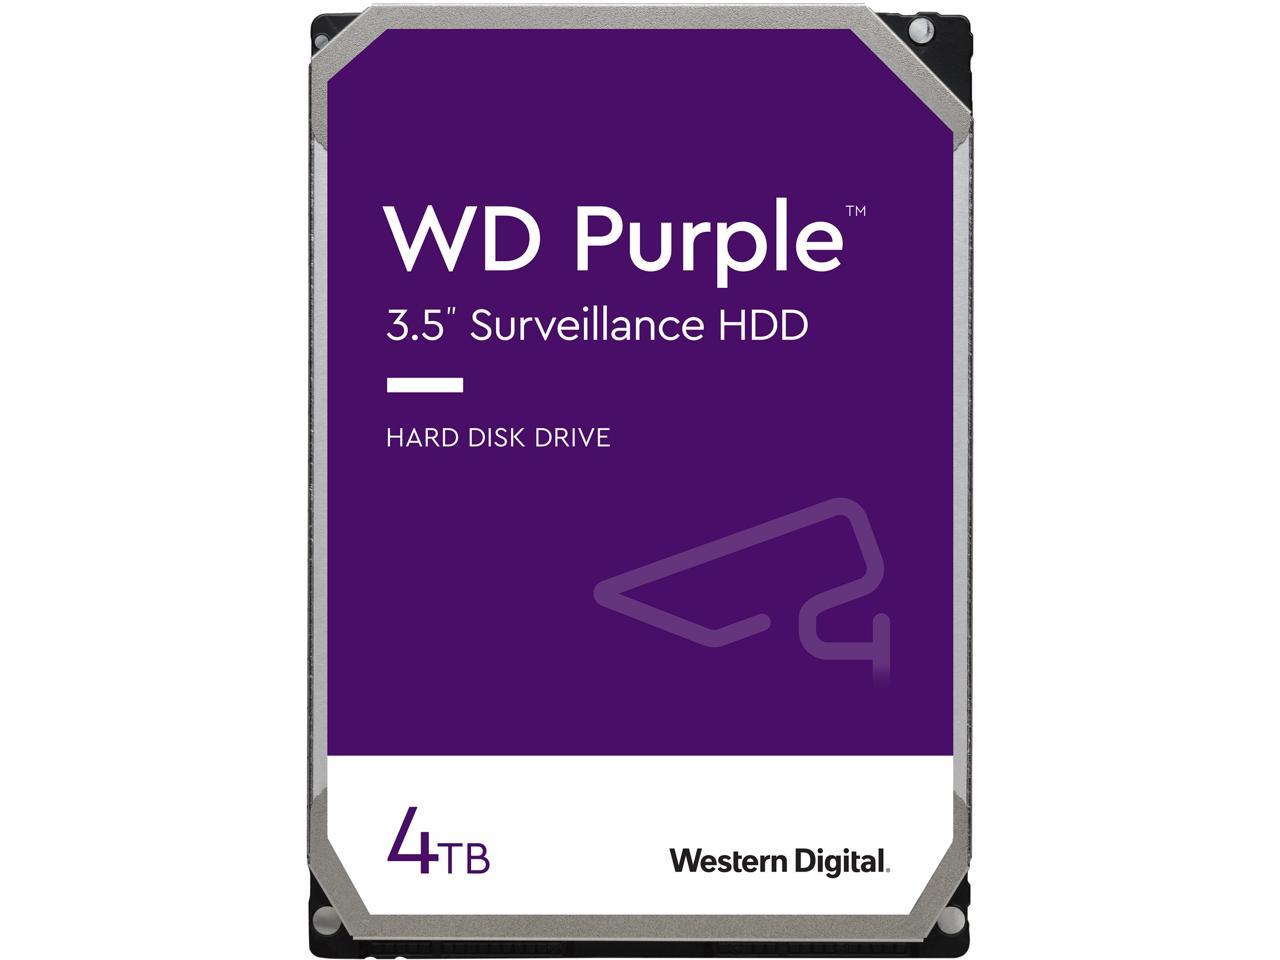 4TB WD Purple Surveillance Hard Disk Drive @Newegg $90